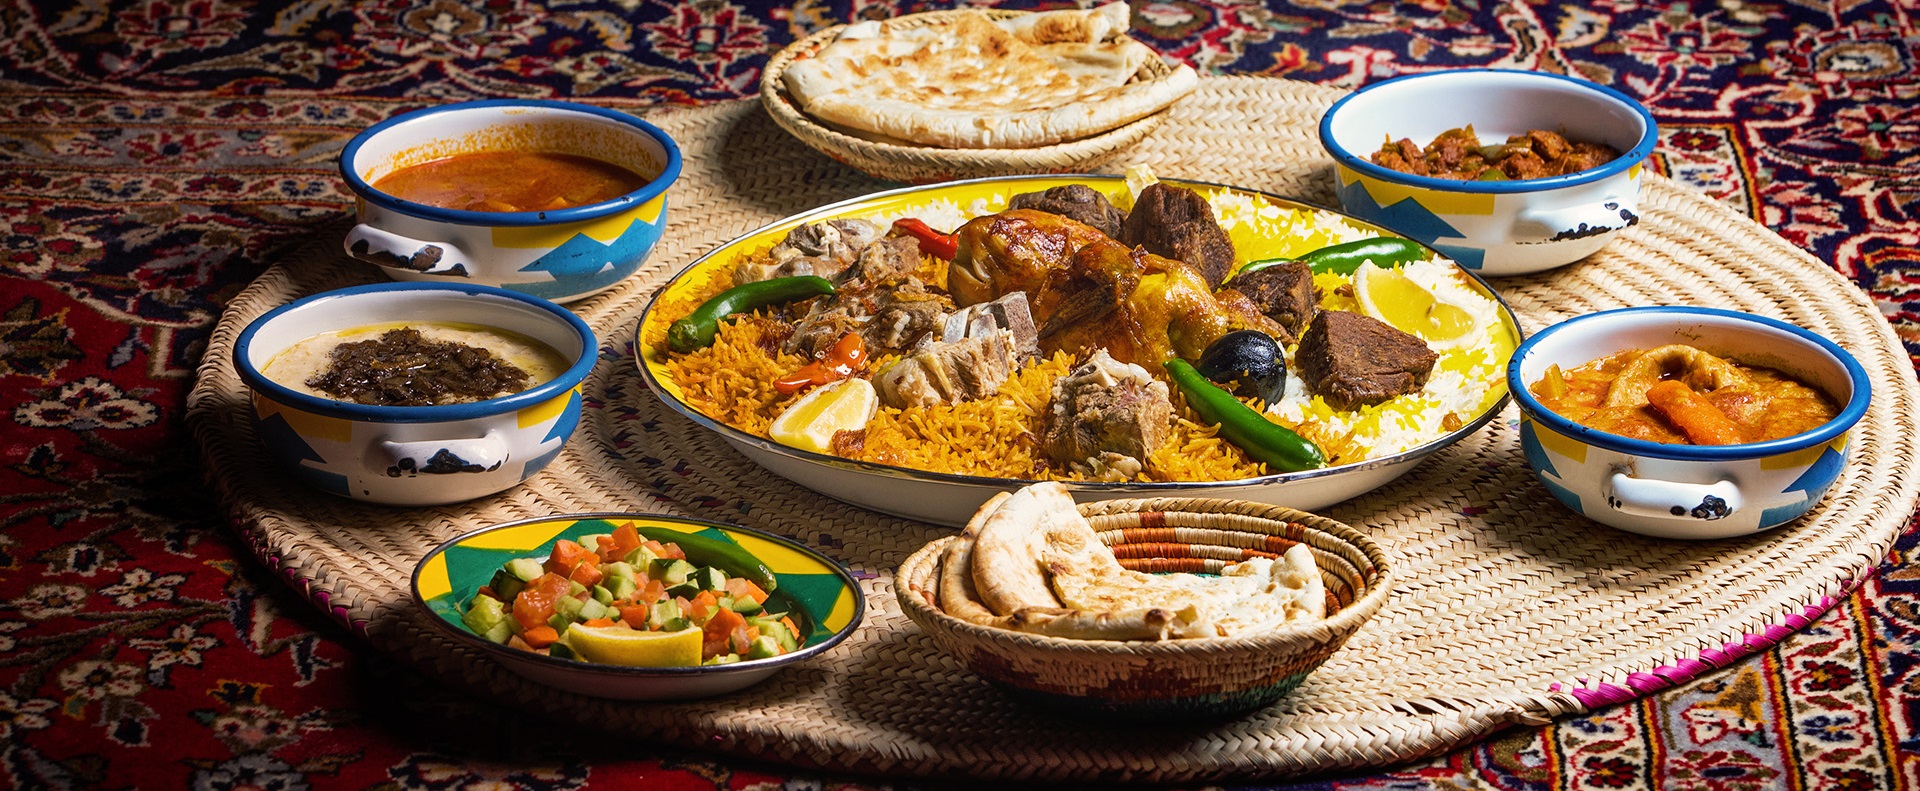 Saudi cuisine food and KSA gastronomy